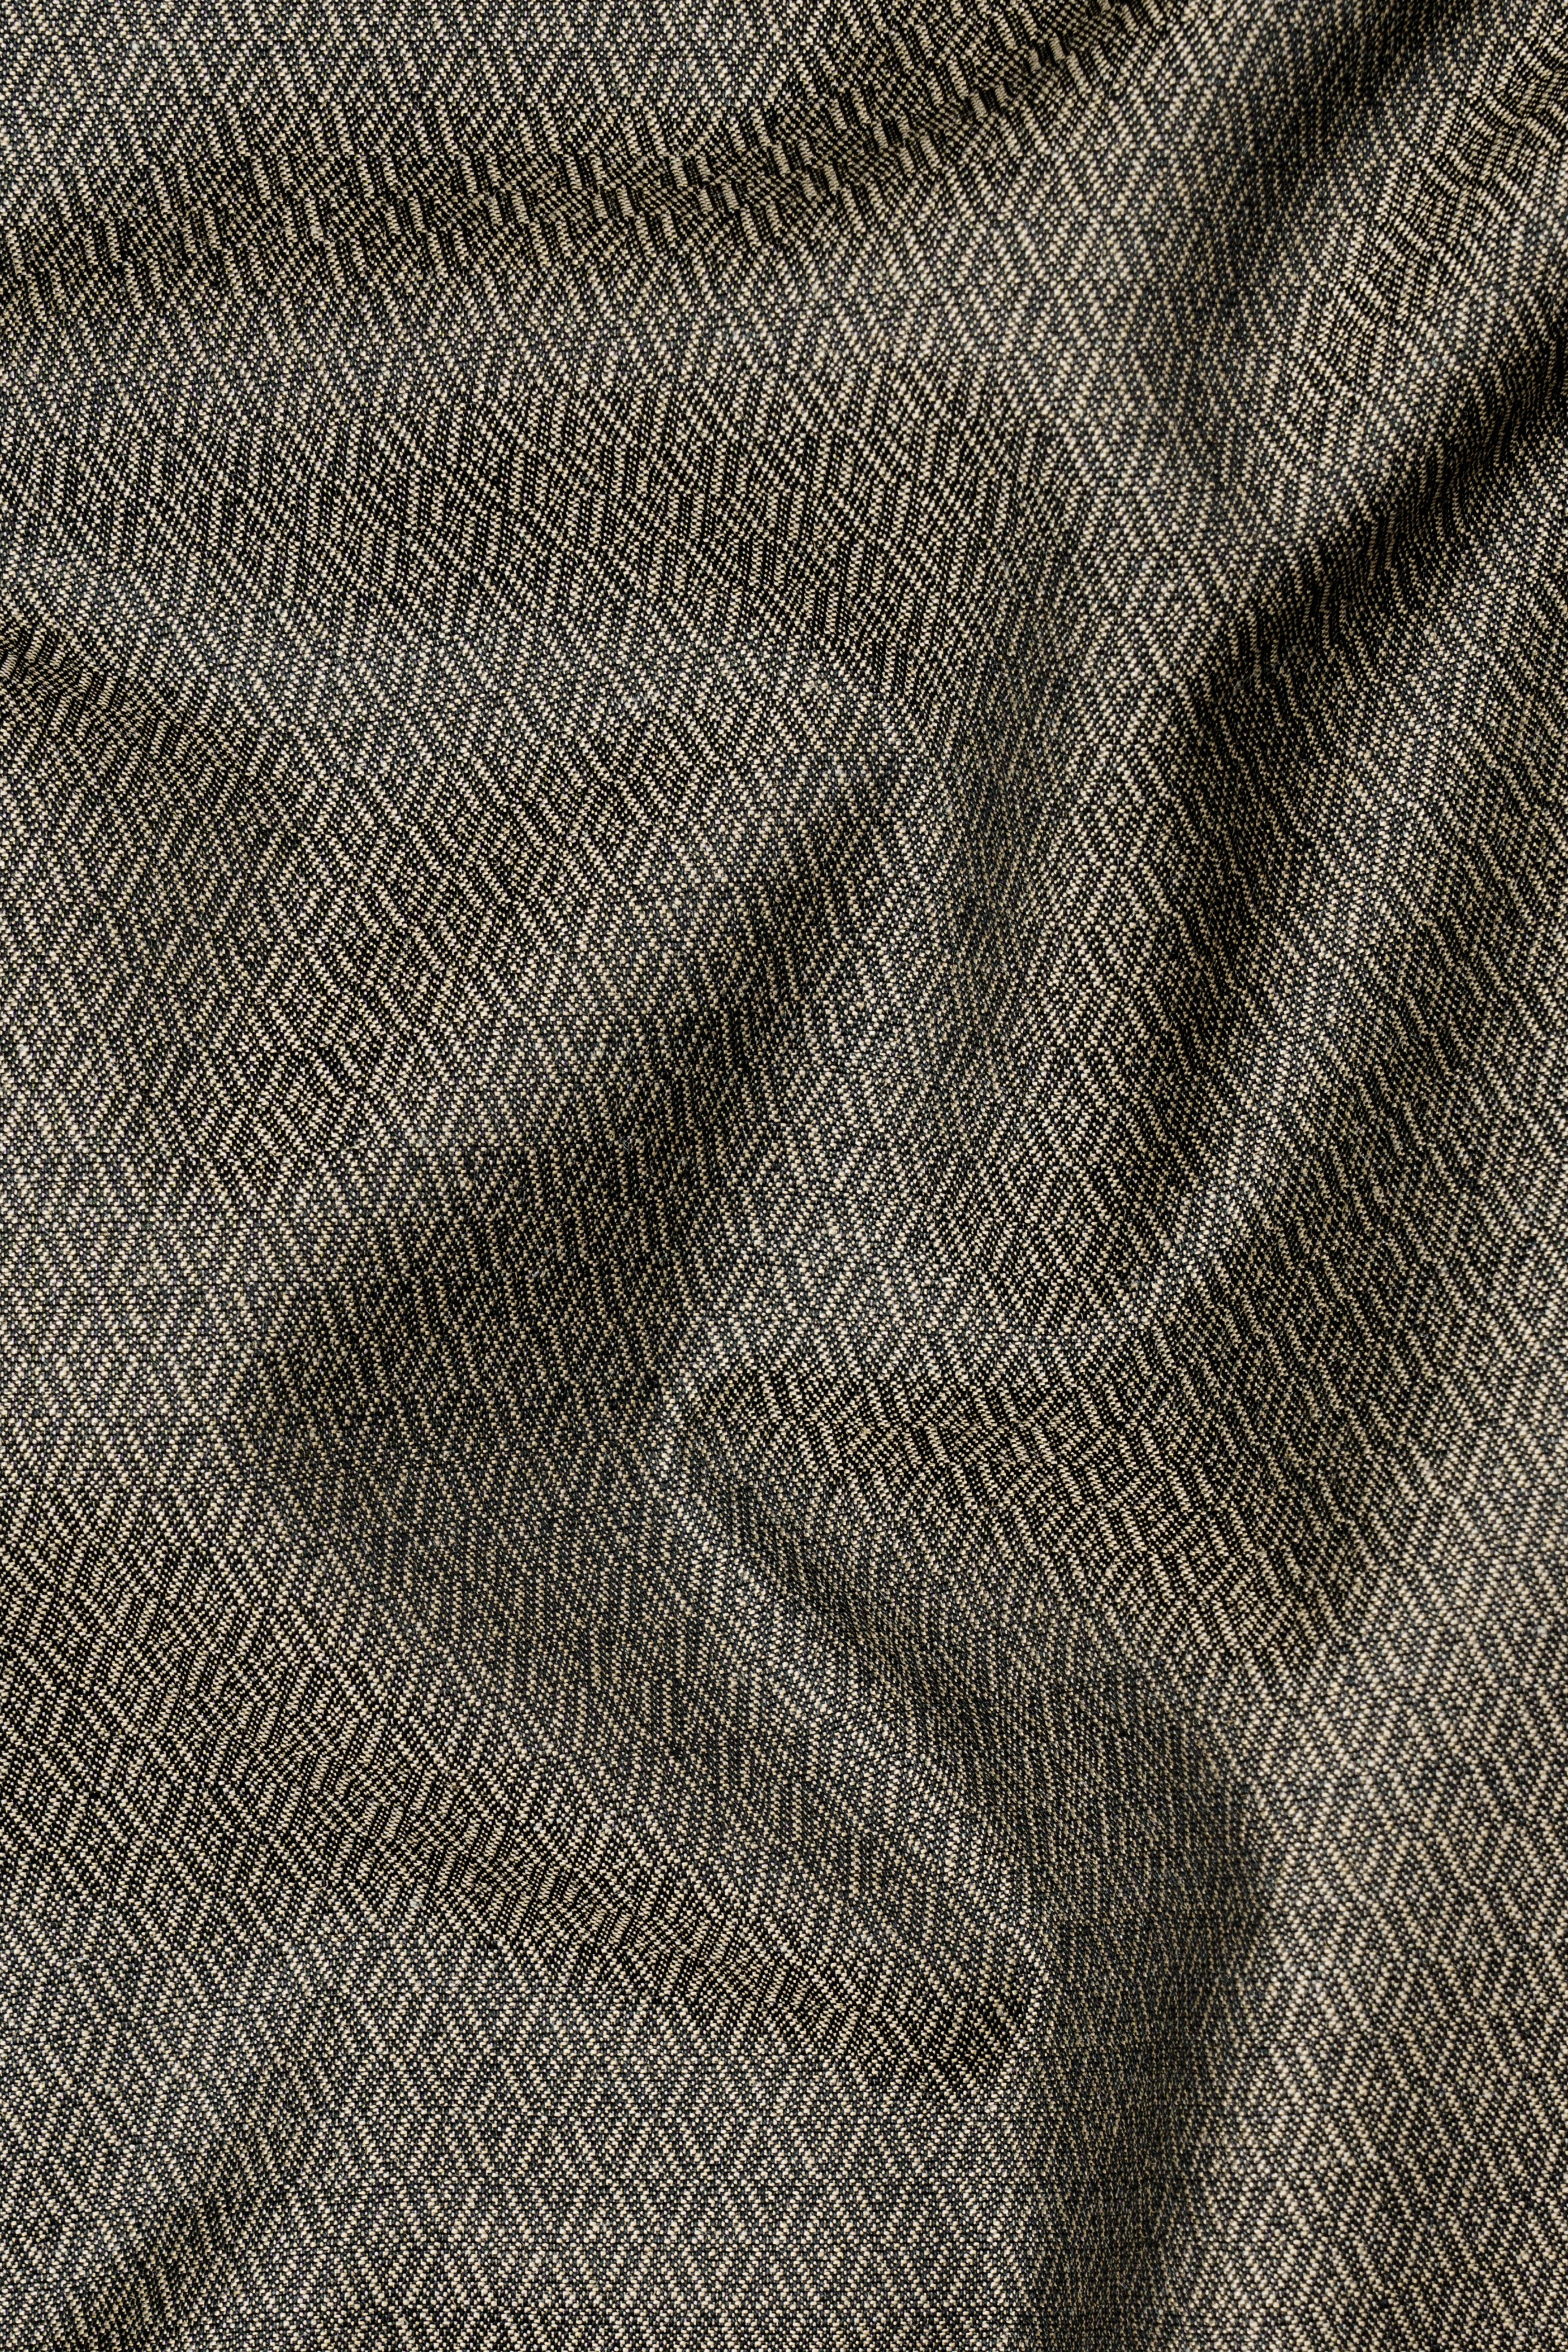 Wenge Brown Dobby Textured wool blend Waistcoat